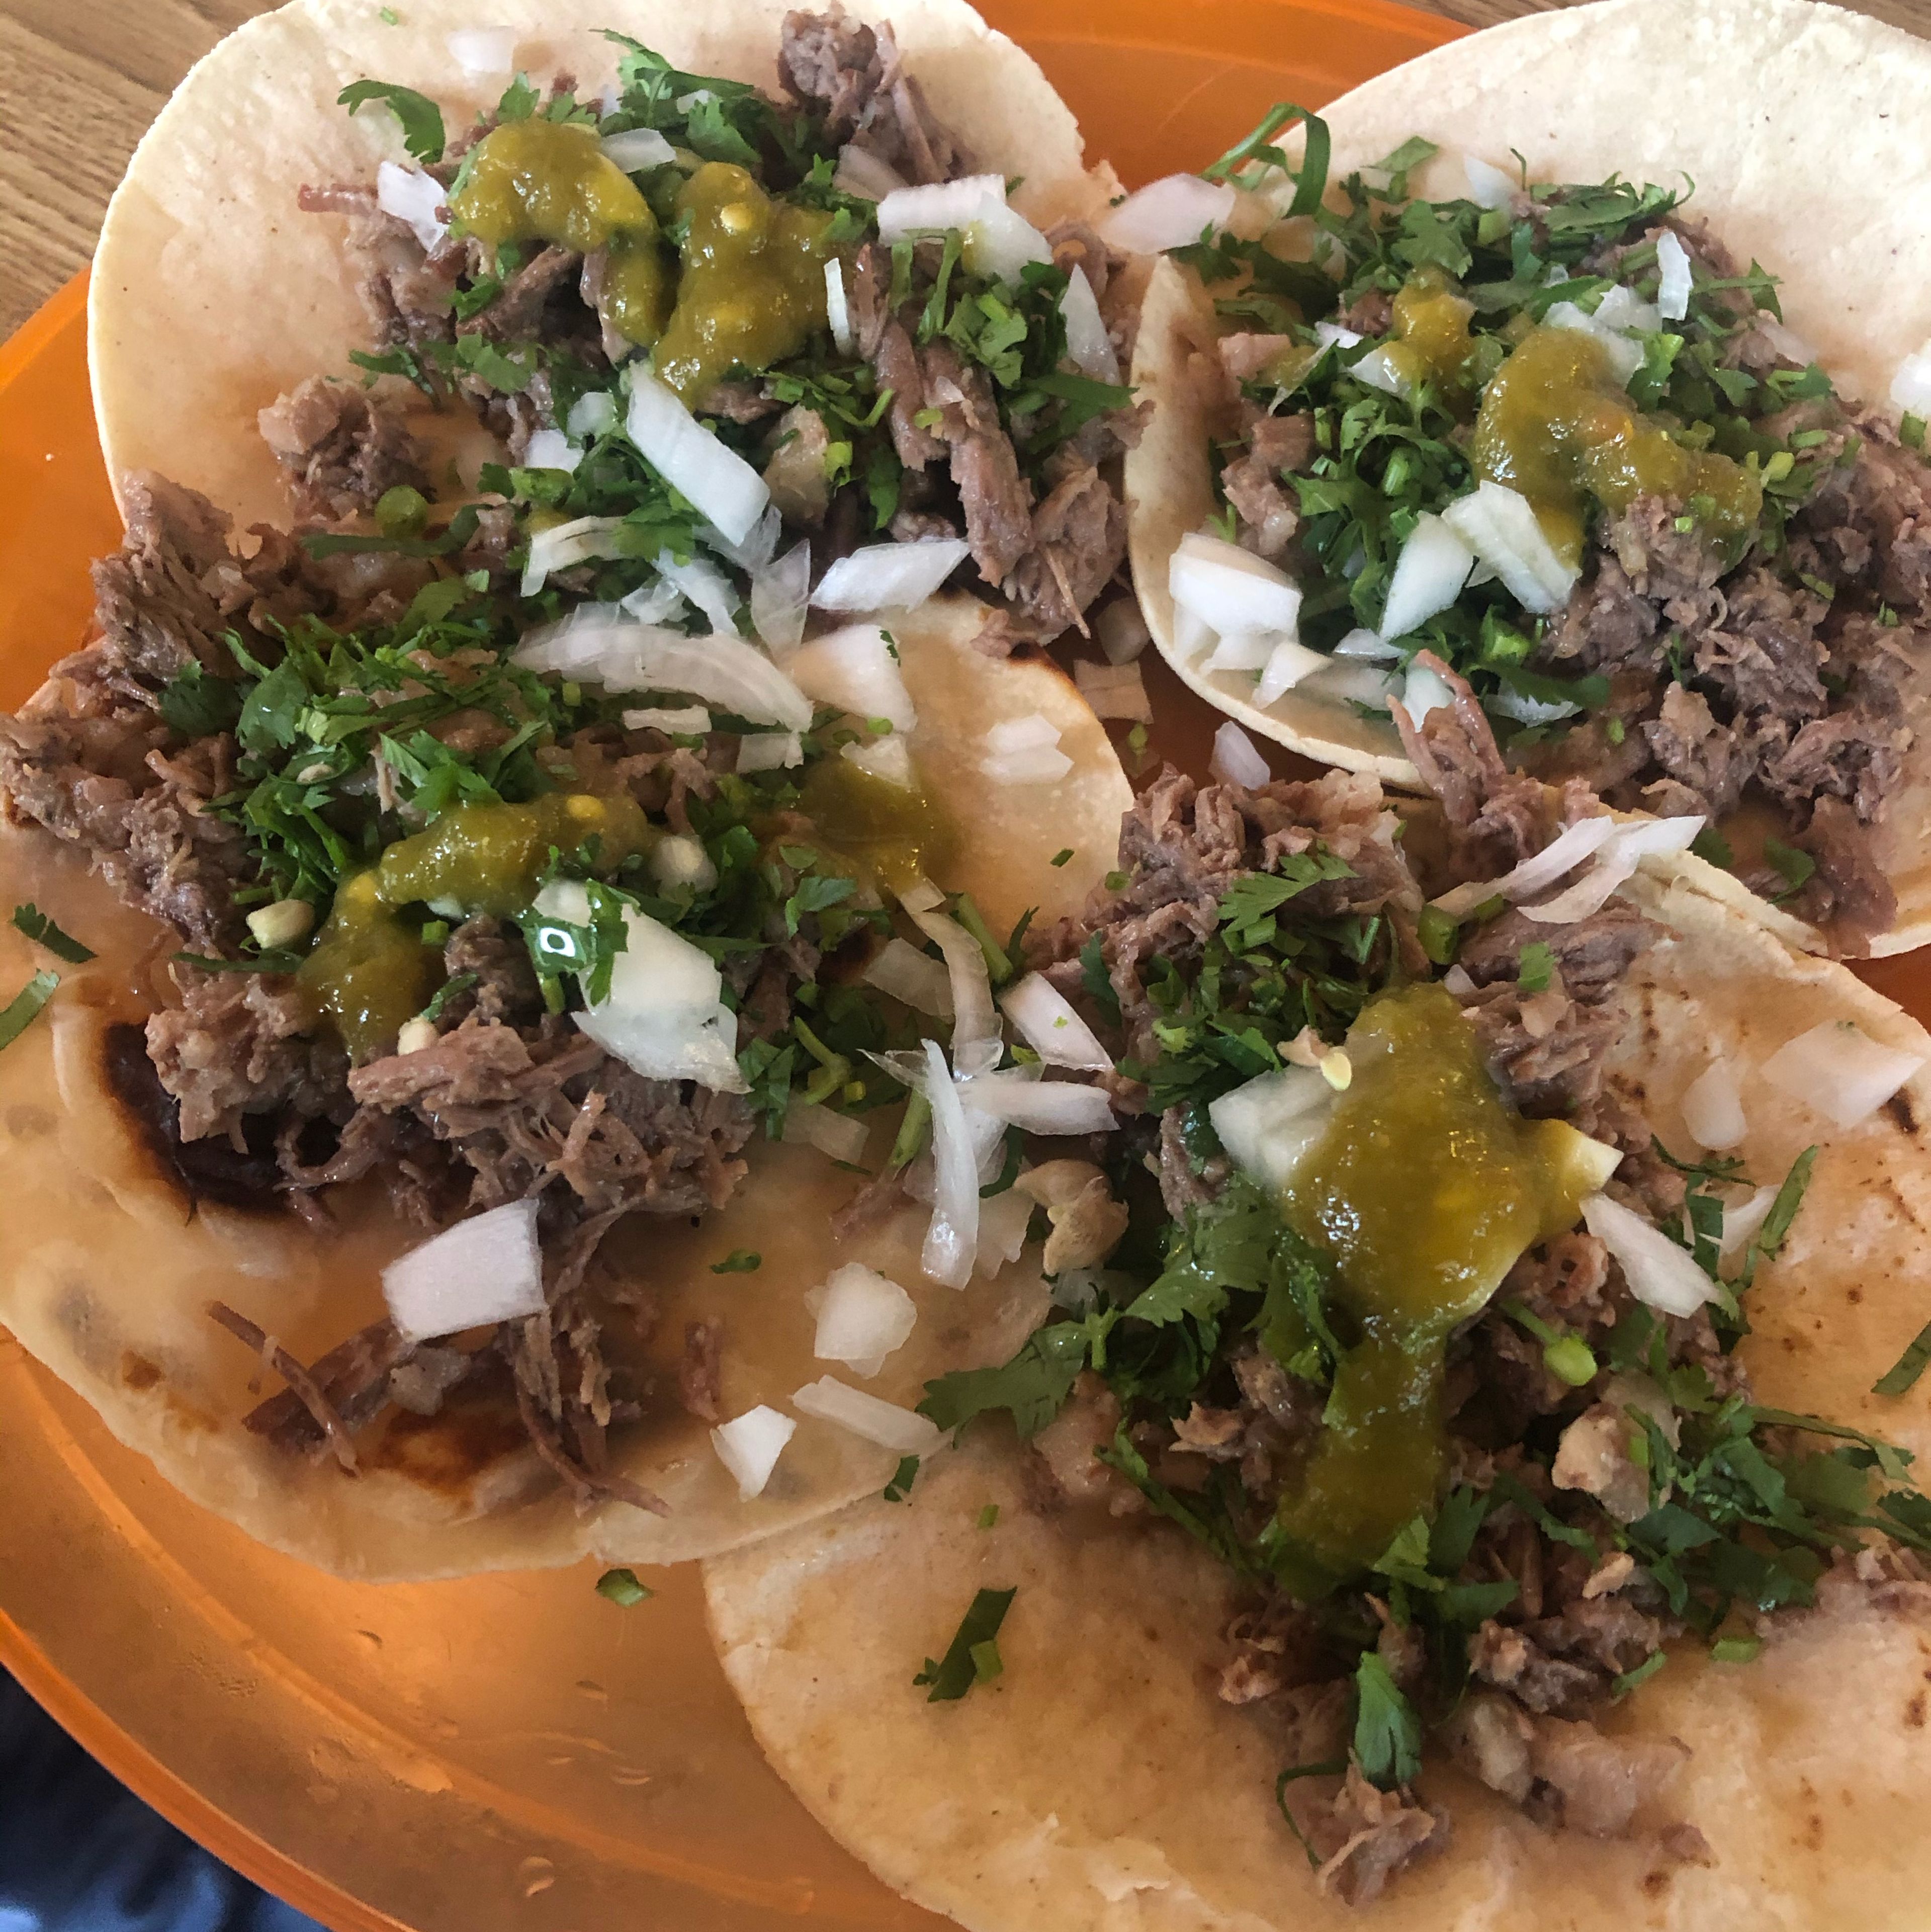 Tacos of picanha